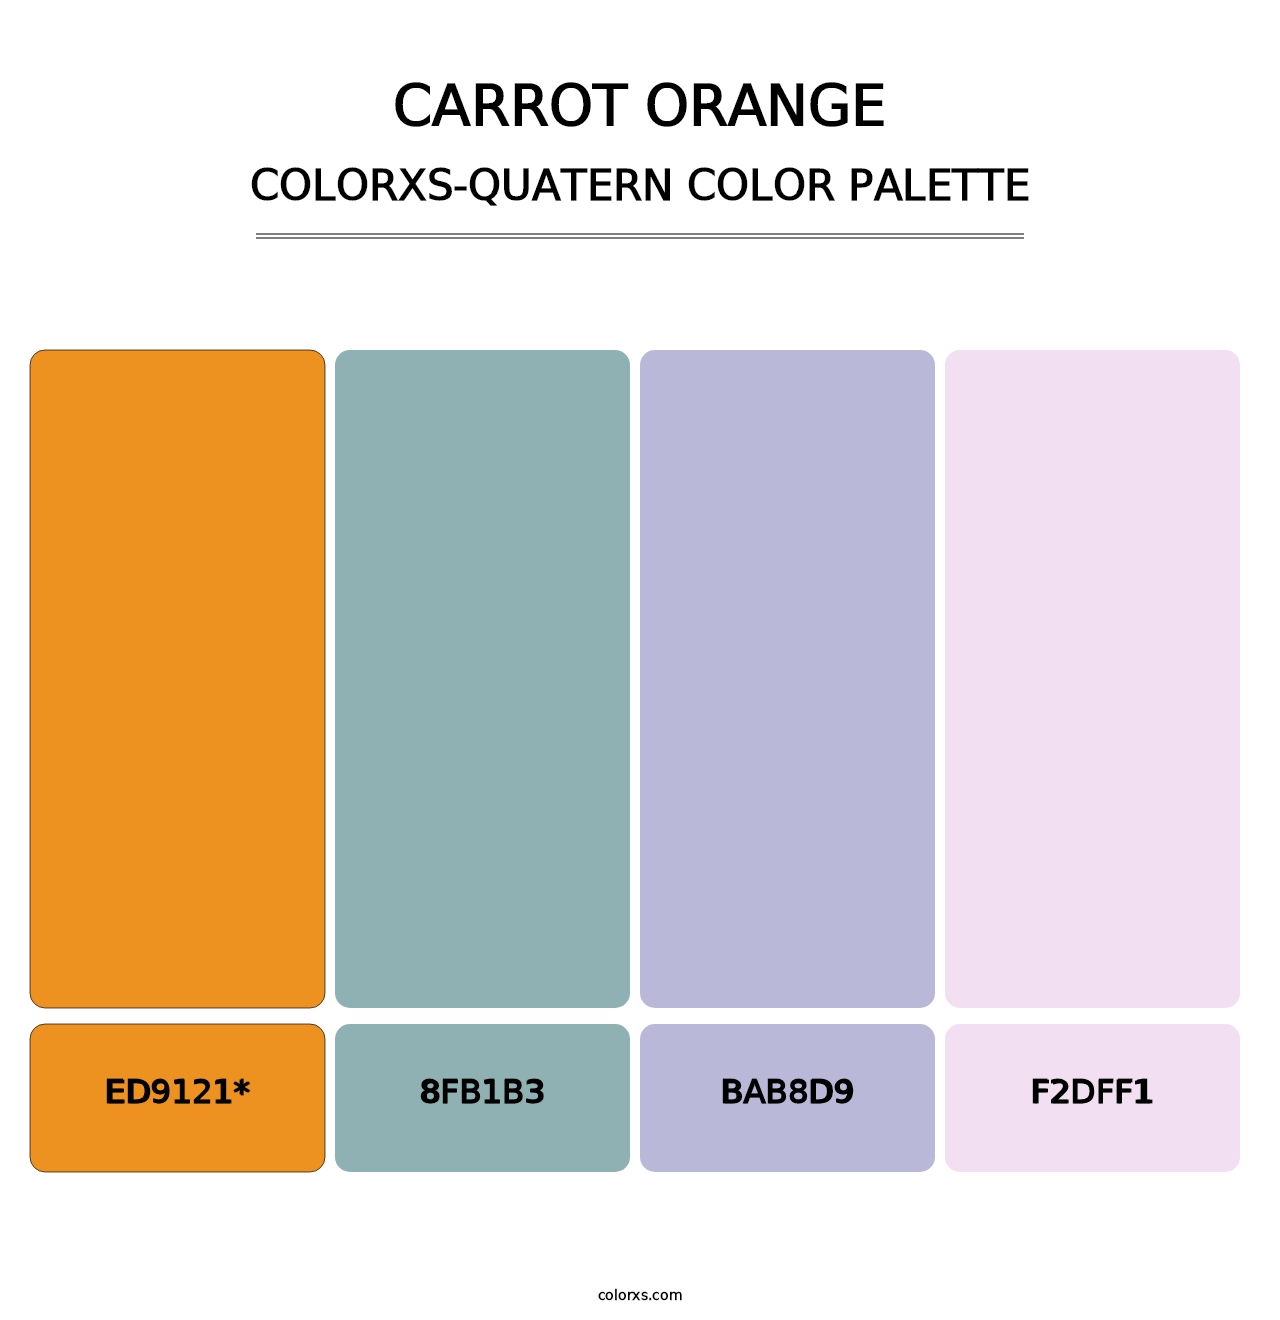 Carrot Orange - Colorxs Quatern Palette